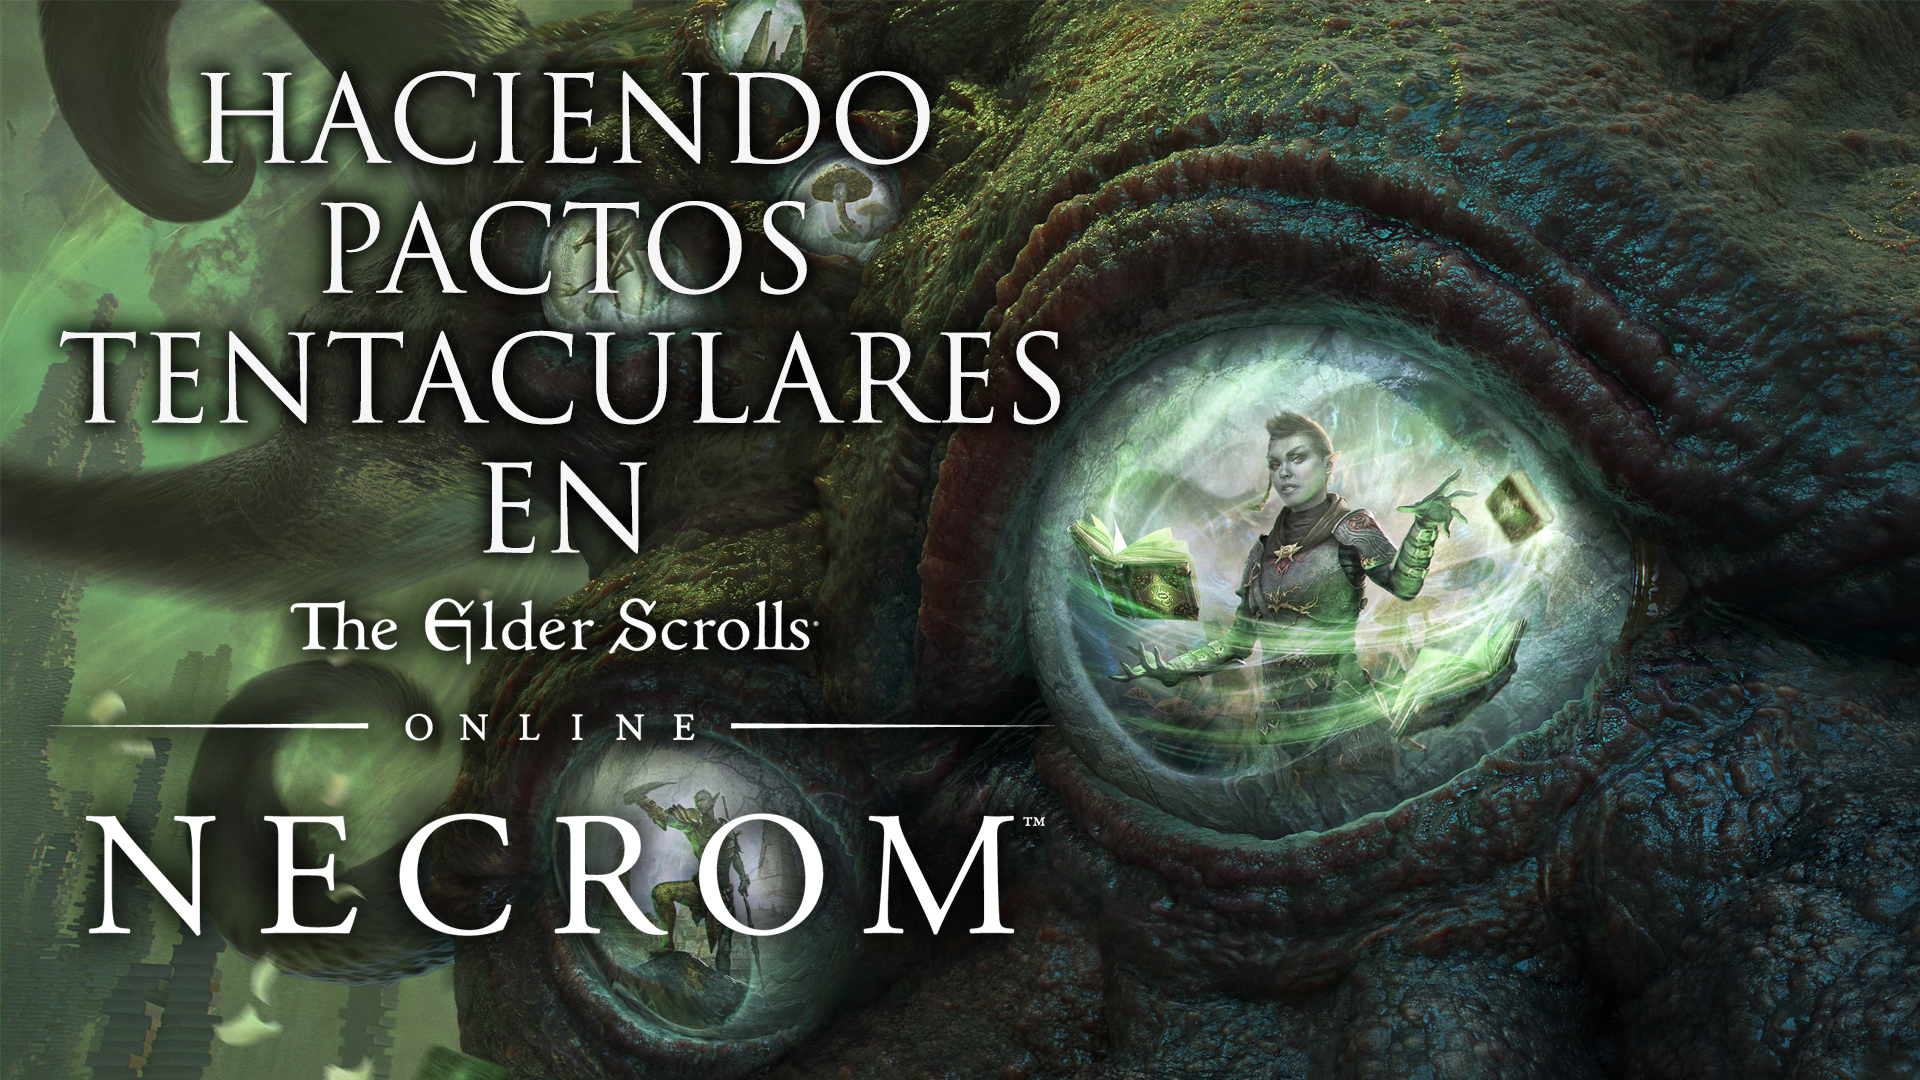 The Elder Scrolls Online: Necrom – Haciendo Pactos Tentaculares